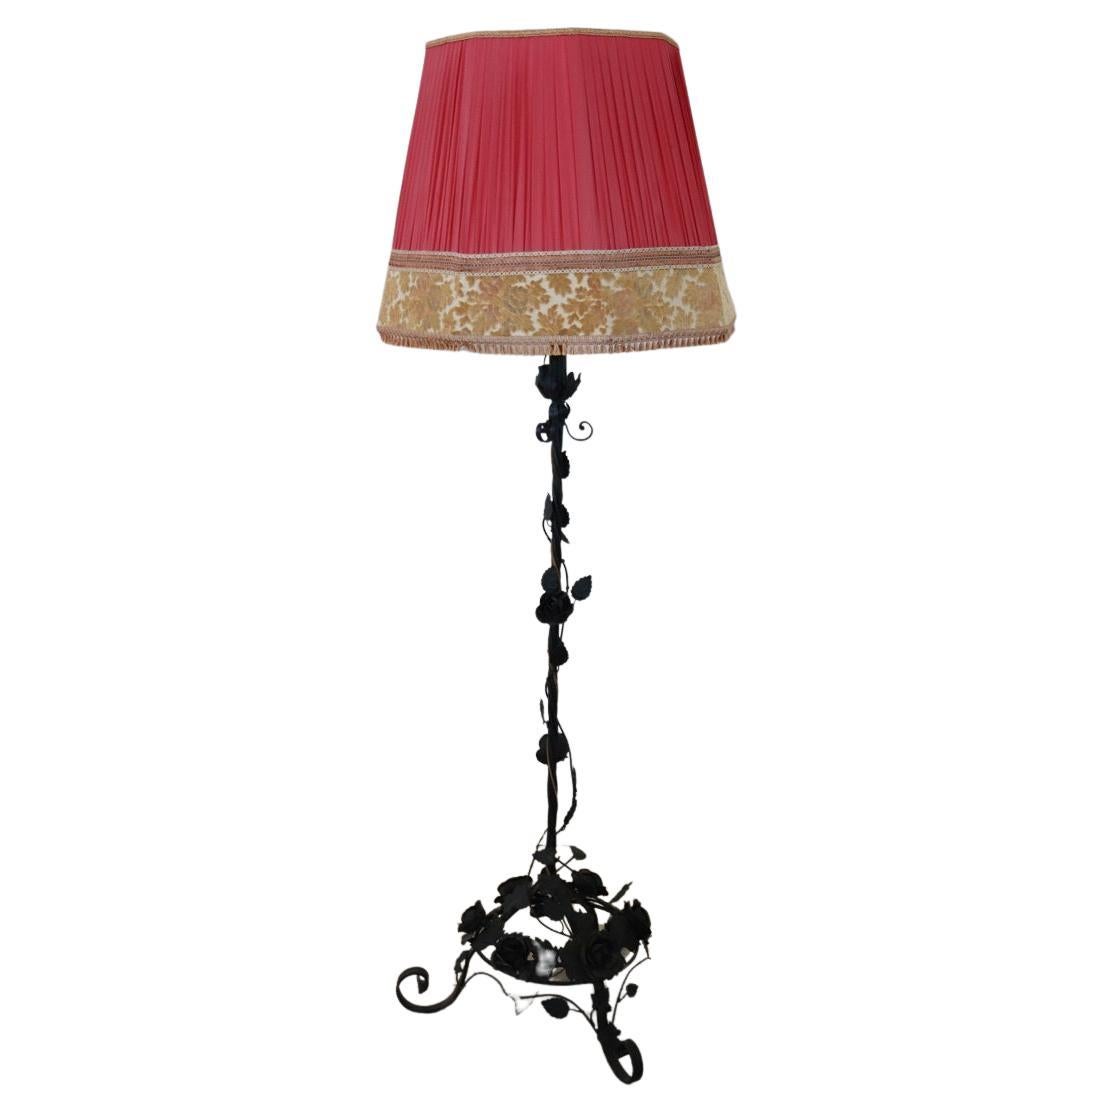 Early 20th Century Italian Art Nouveau Iron Floor Lamp For Sale